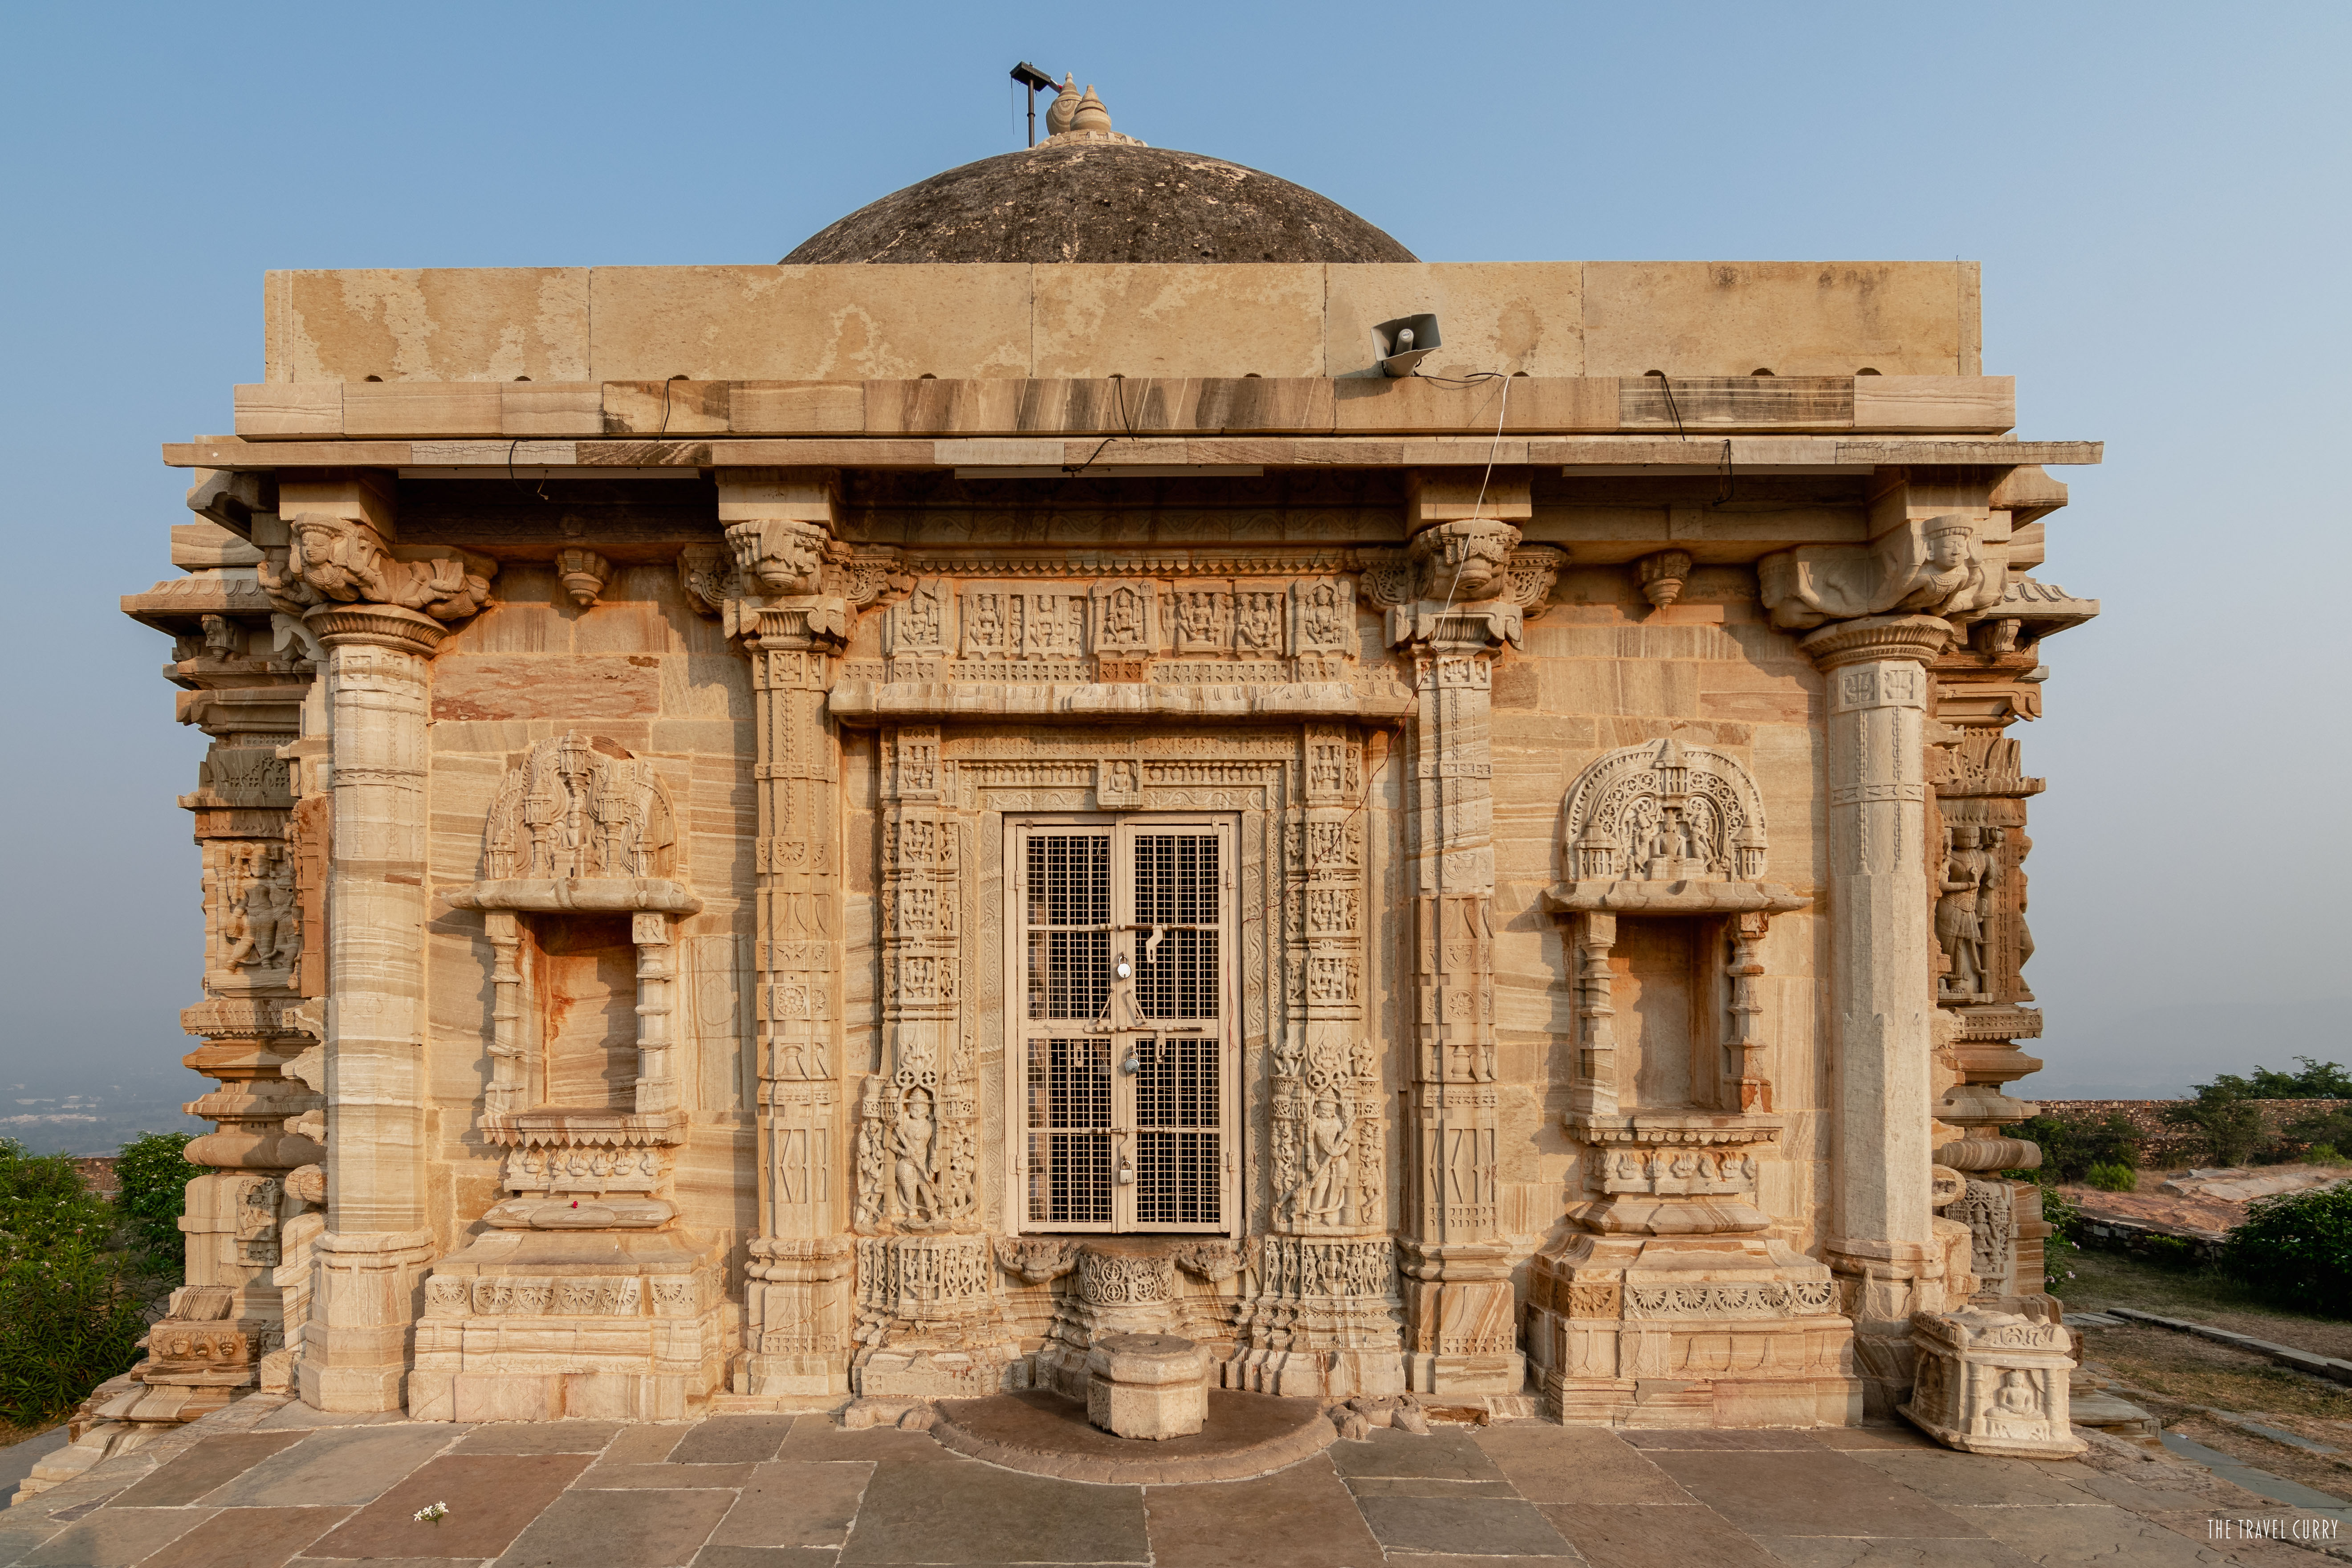 The Jain Temple next to Kirti Stambha